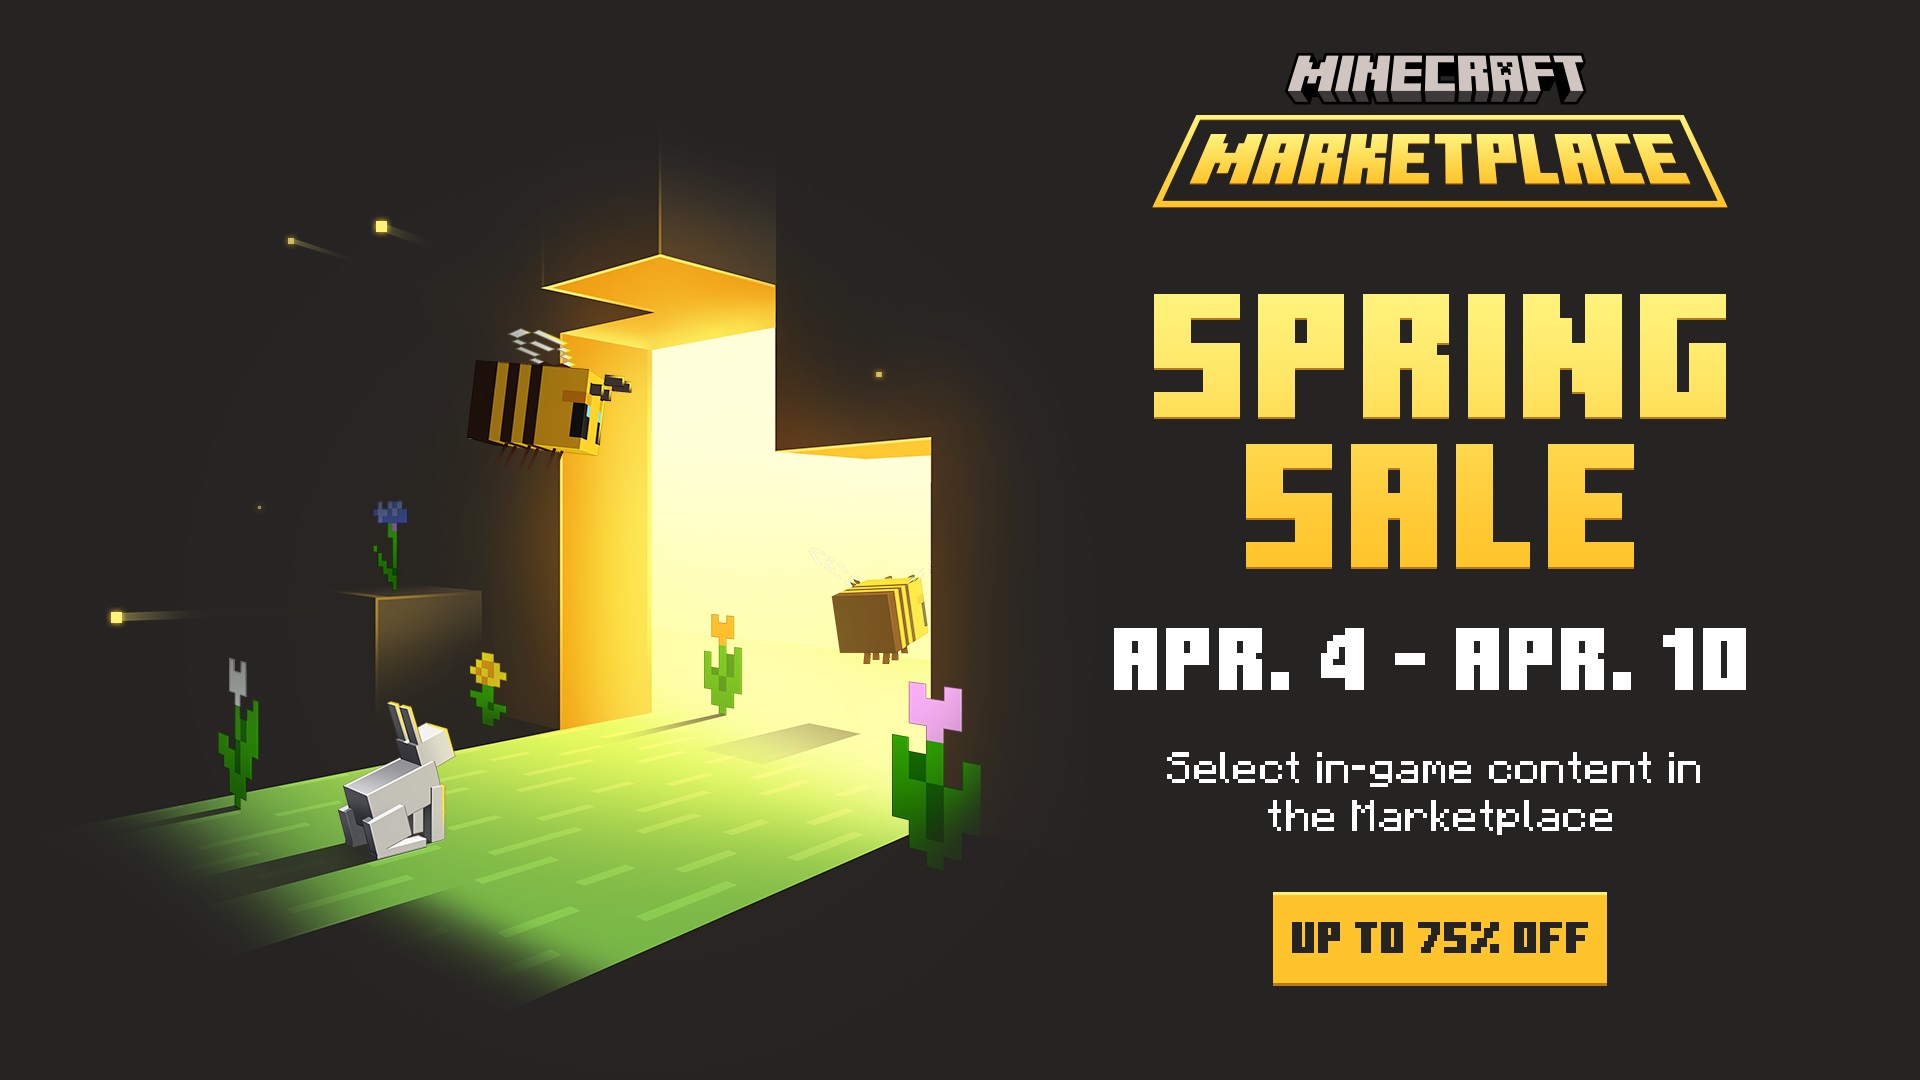 Minecraft Marketplace Sale Hero